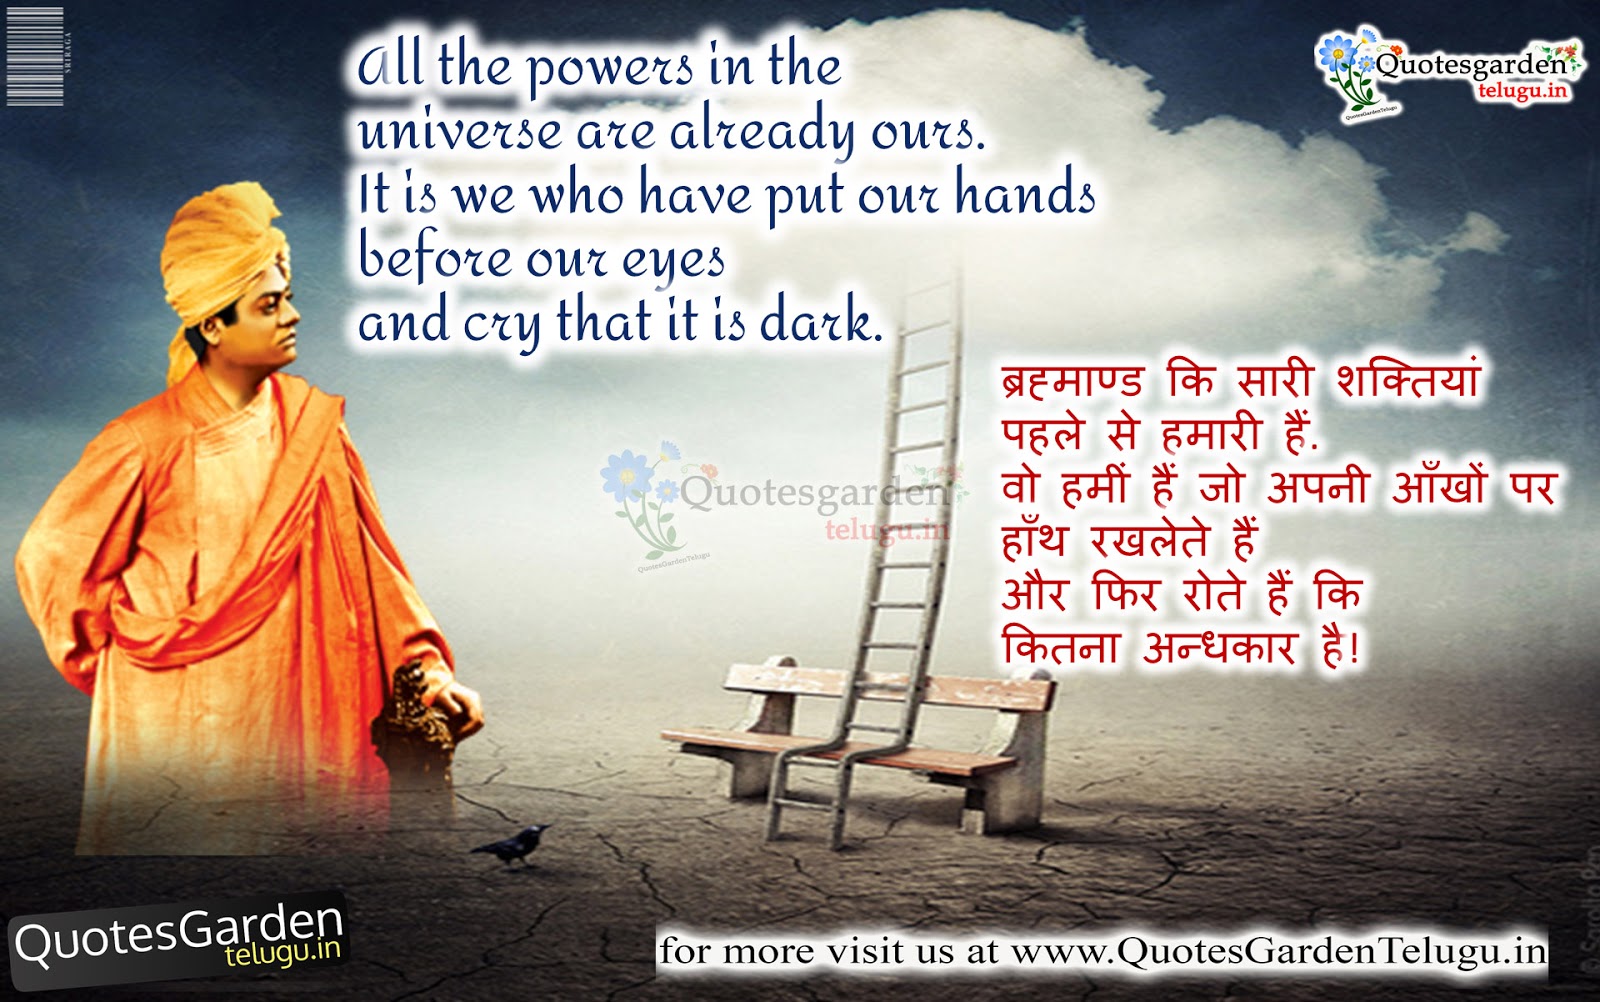 Swami Vivekananda Great Quotes And Sayings In Hindi And English Quotes Garden Telugu Telugu Quotes English Quotes Hindi Quotes